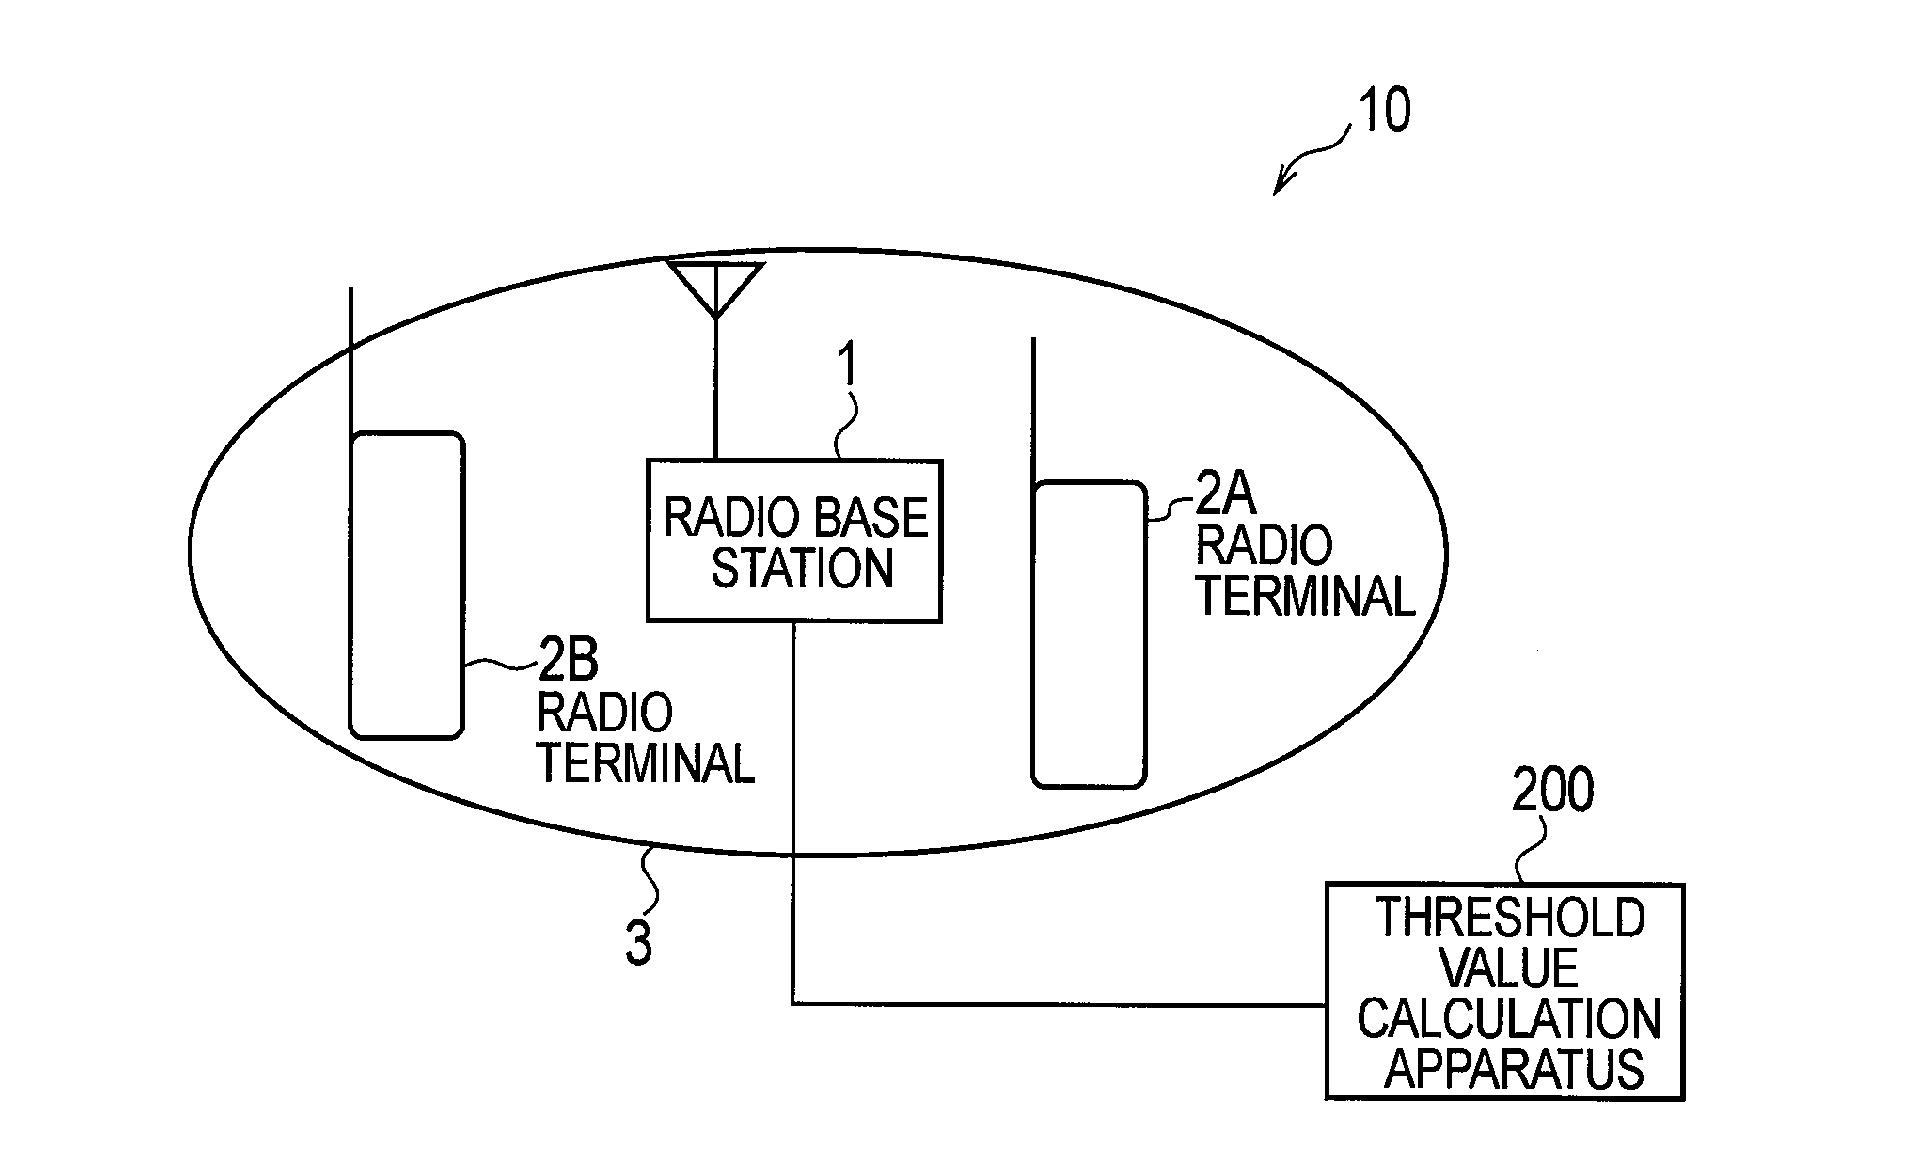 Threshold value calculation method a radio base station